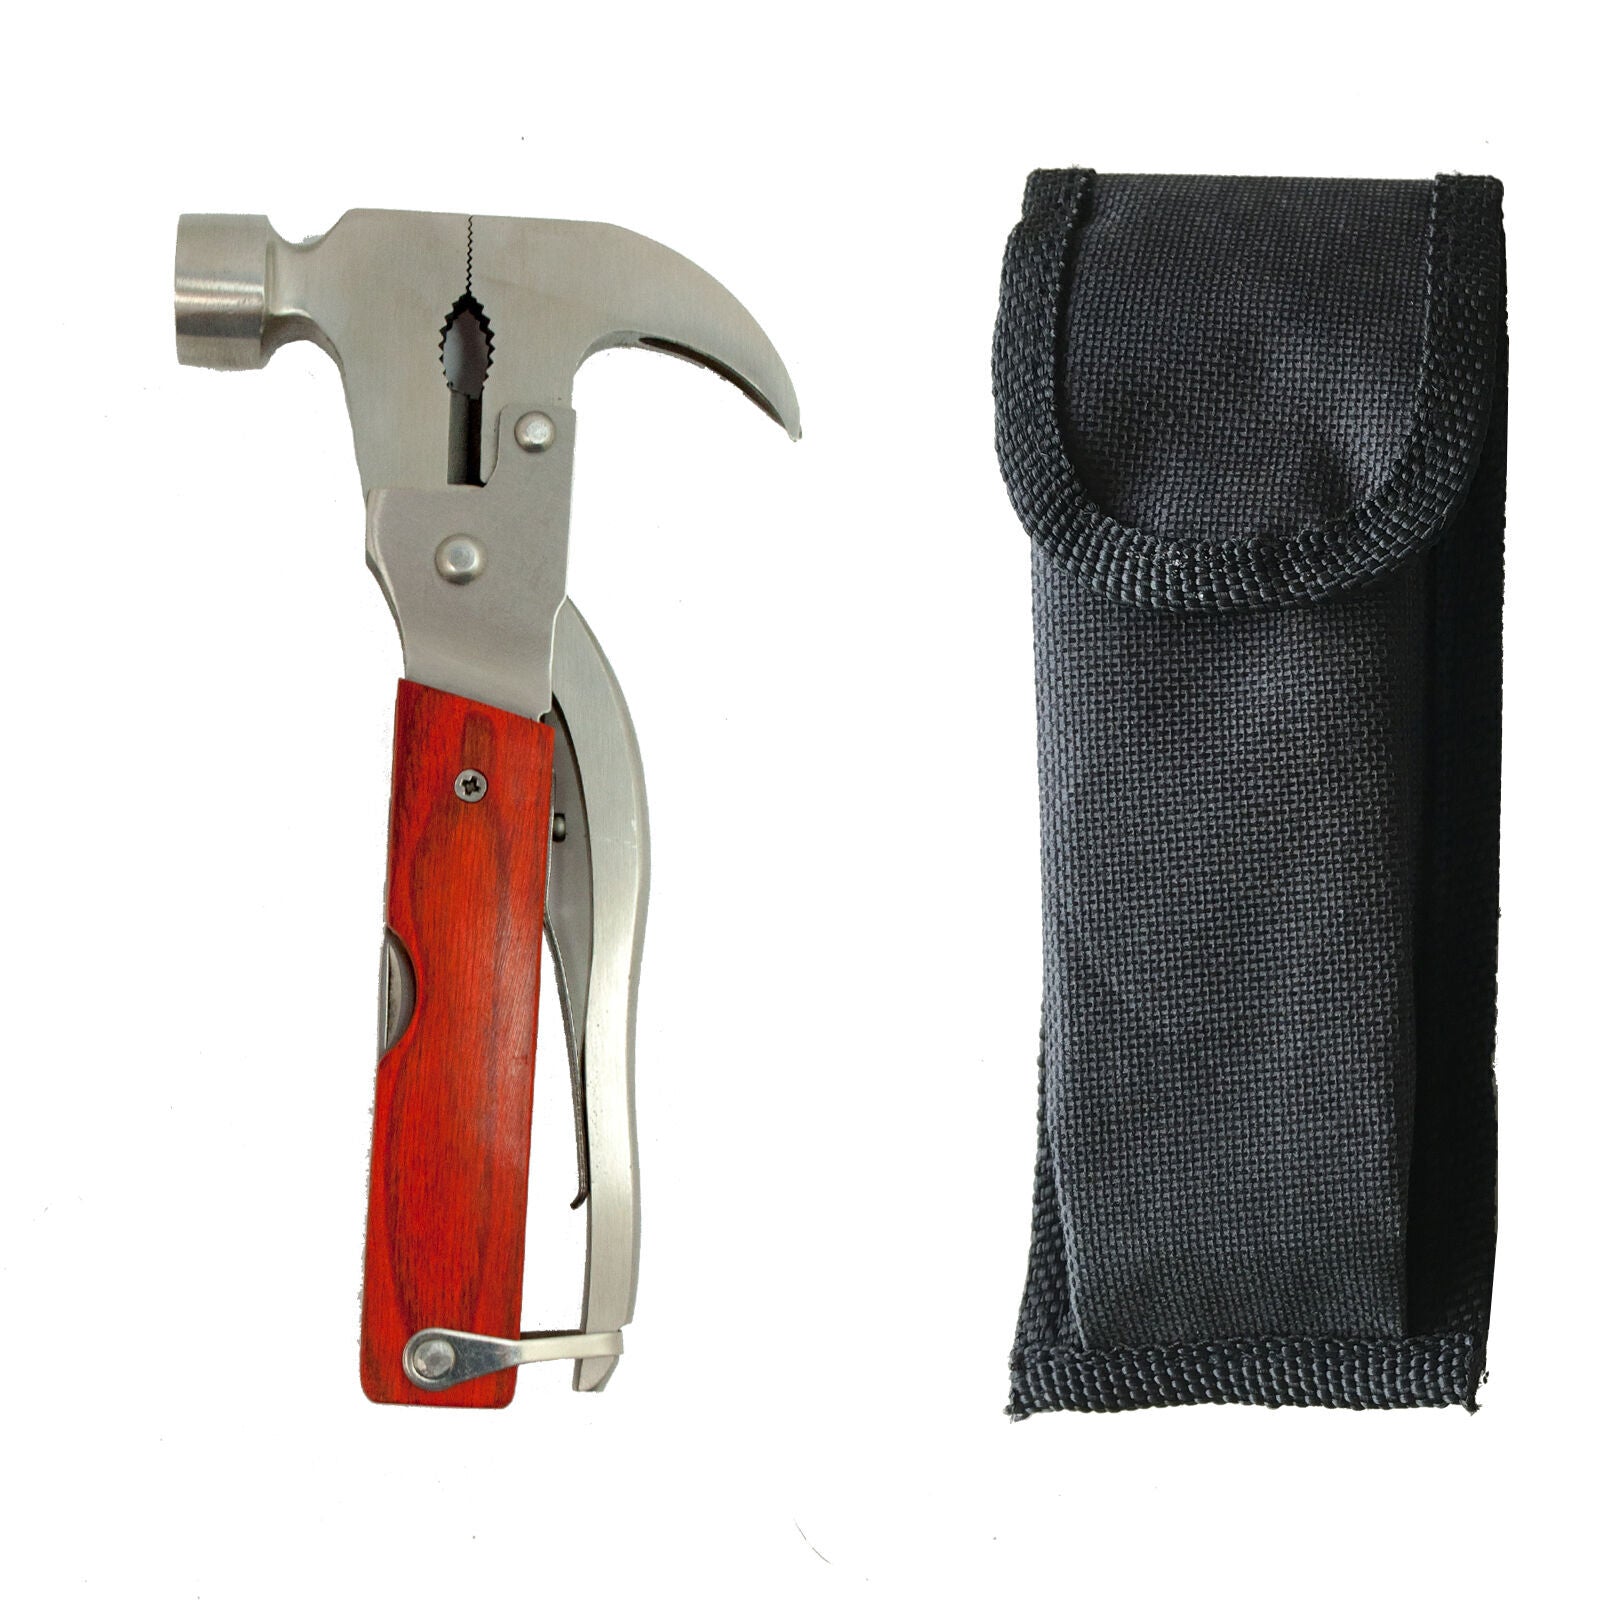 12 in 1 Multi Tool Hammer Survival Emergency Tool Outdoor Camping Gear Knife Swiss army Knife - Homeware Discounts